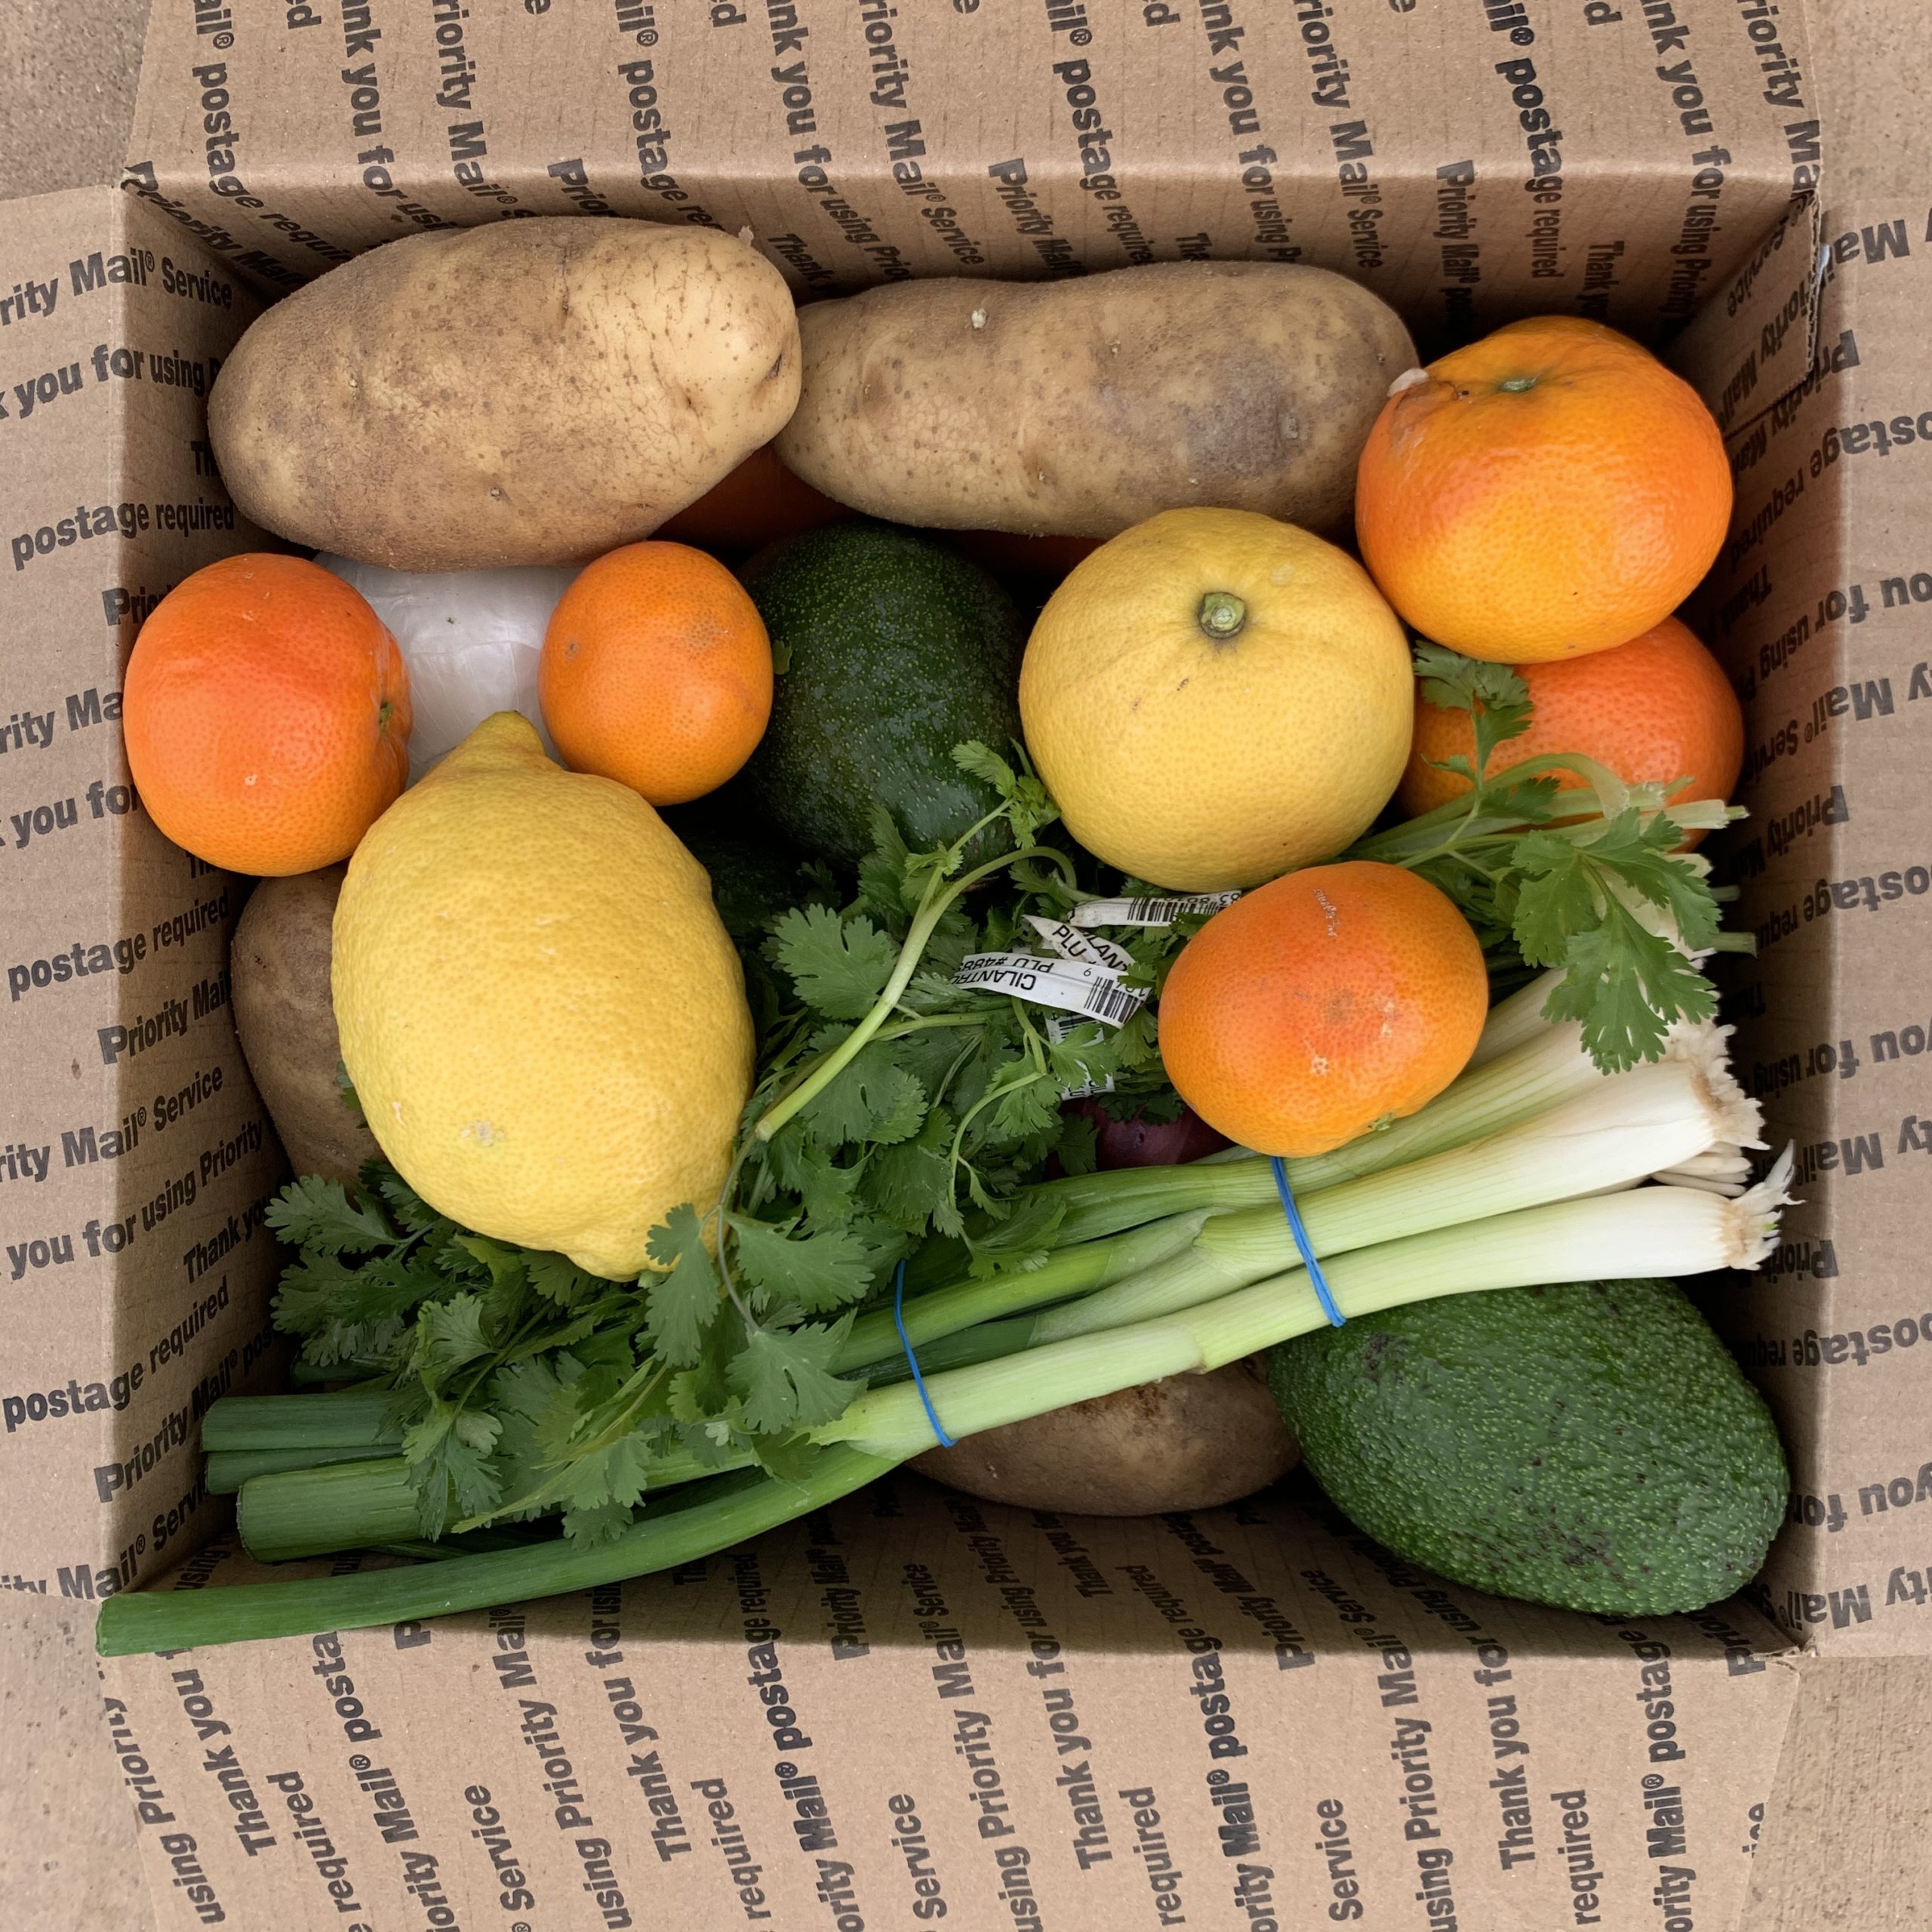 Variety produce box from California Avocados Direct